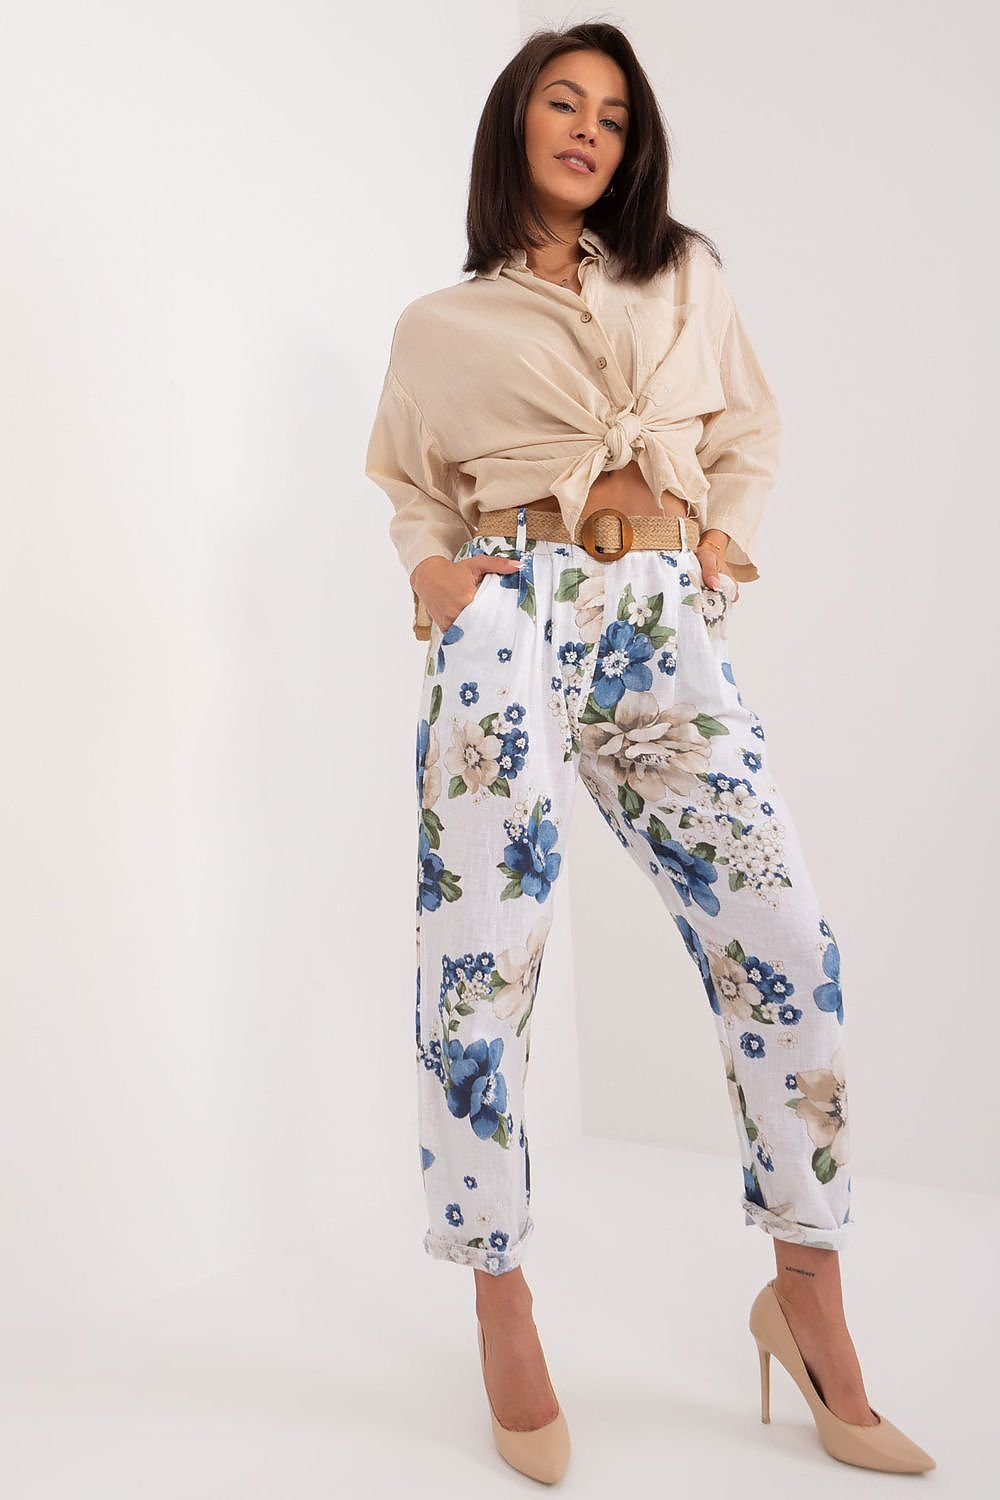 Casual-style high-waist fabric pants